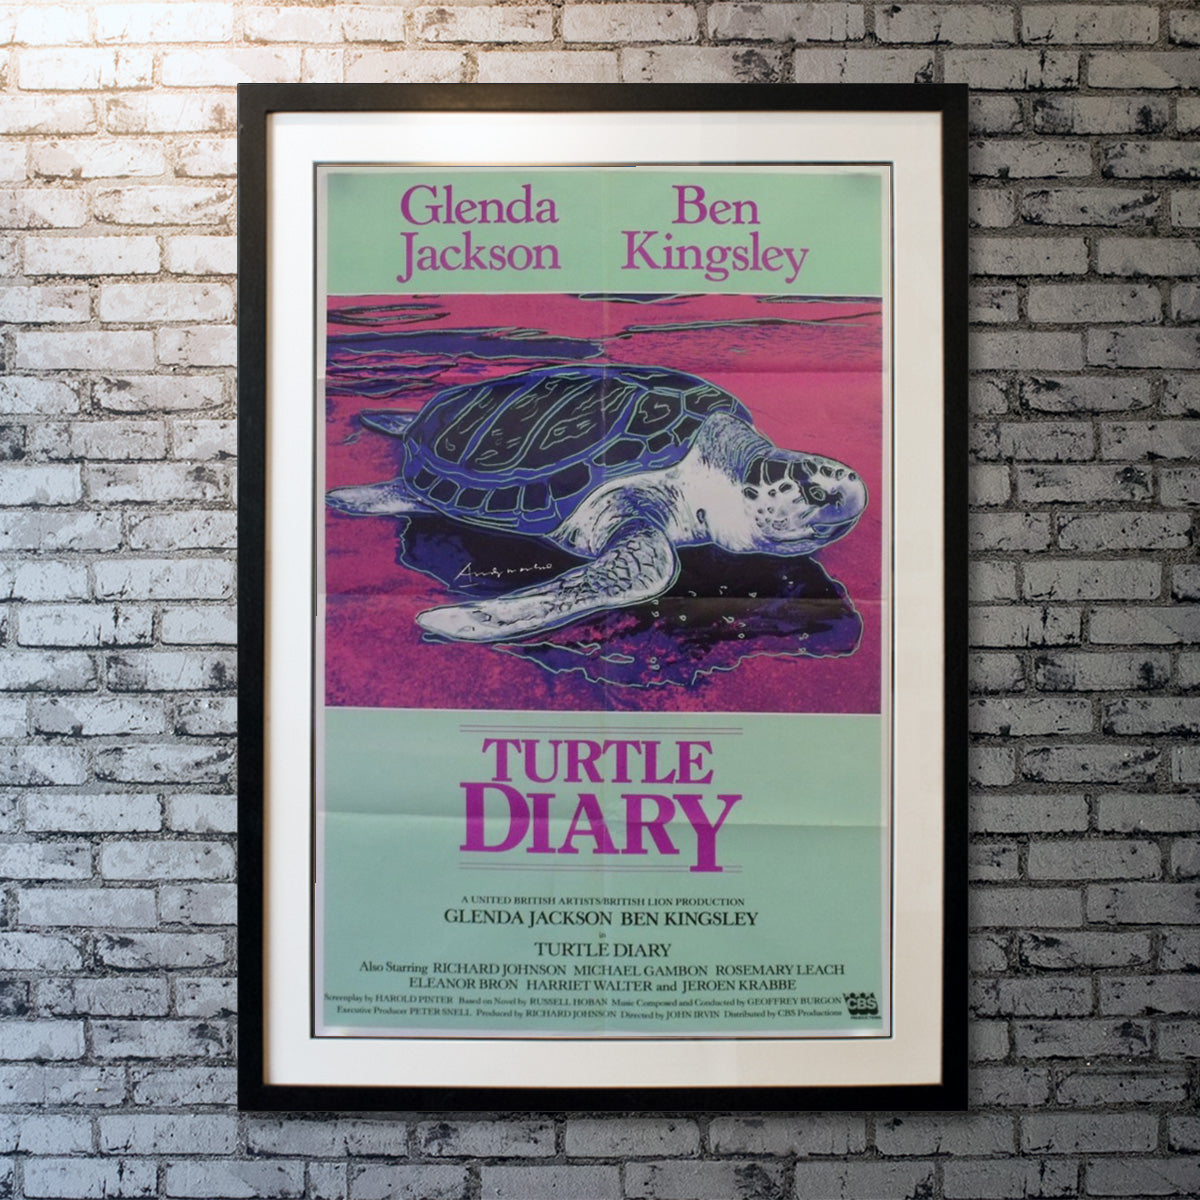 Turtle Diary (1985)